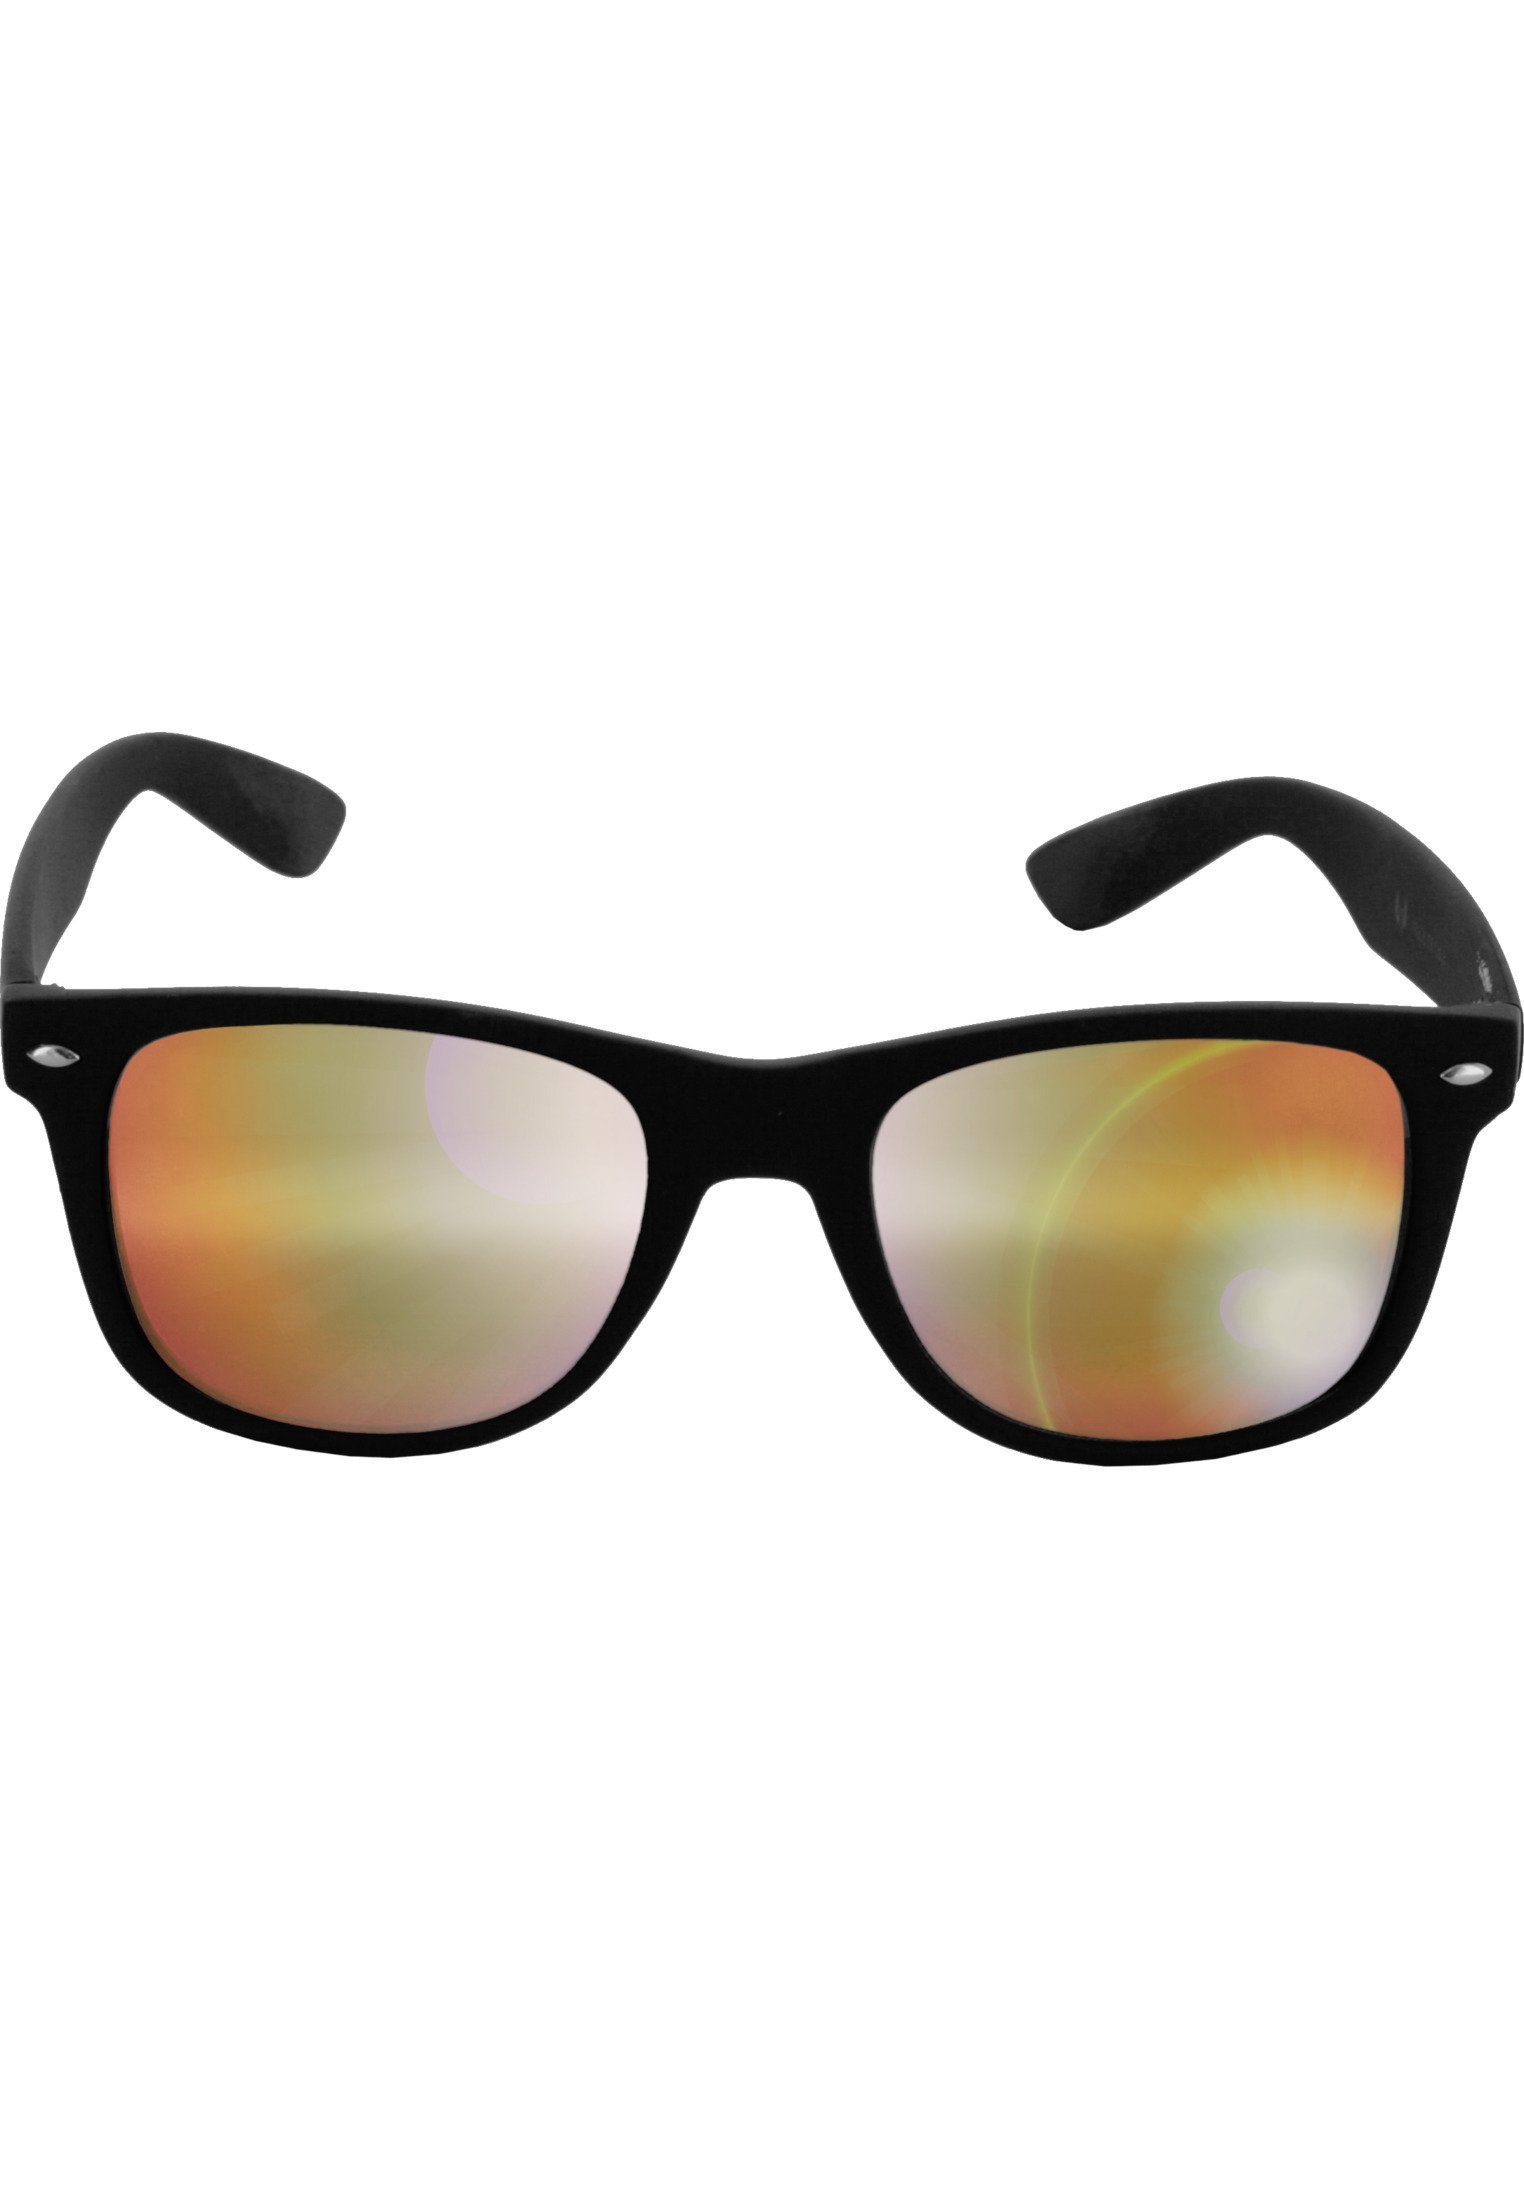 Sunglasses blk/orange Likoma MSTRDS Accessoires Mirror Sonnenbrille